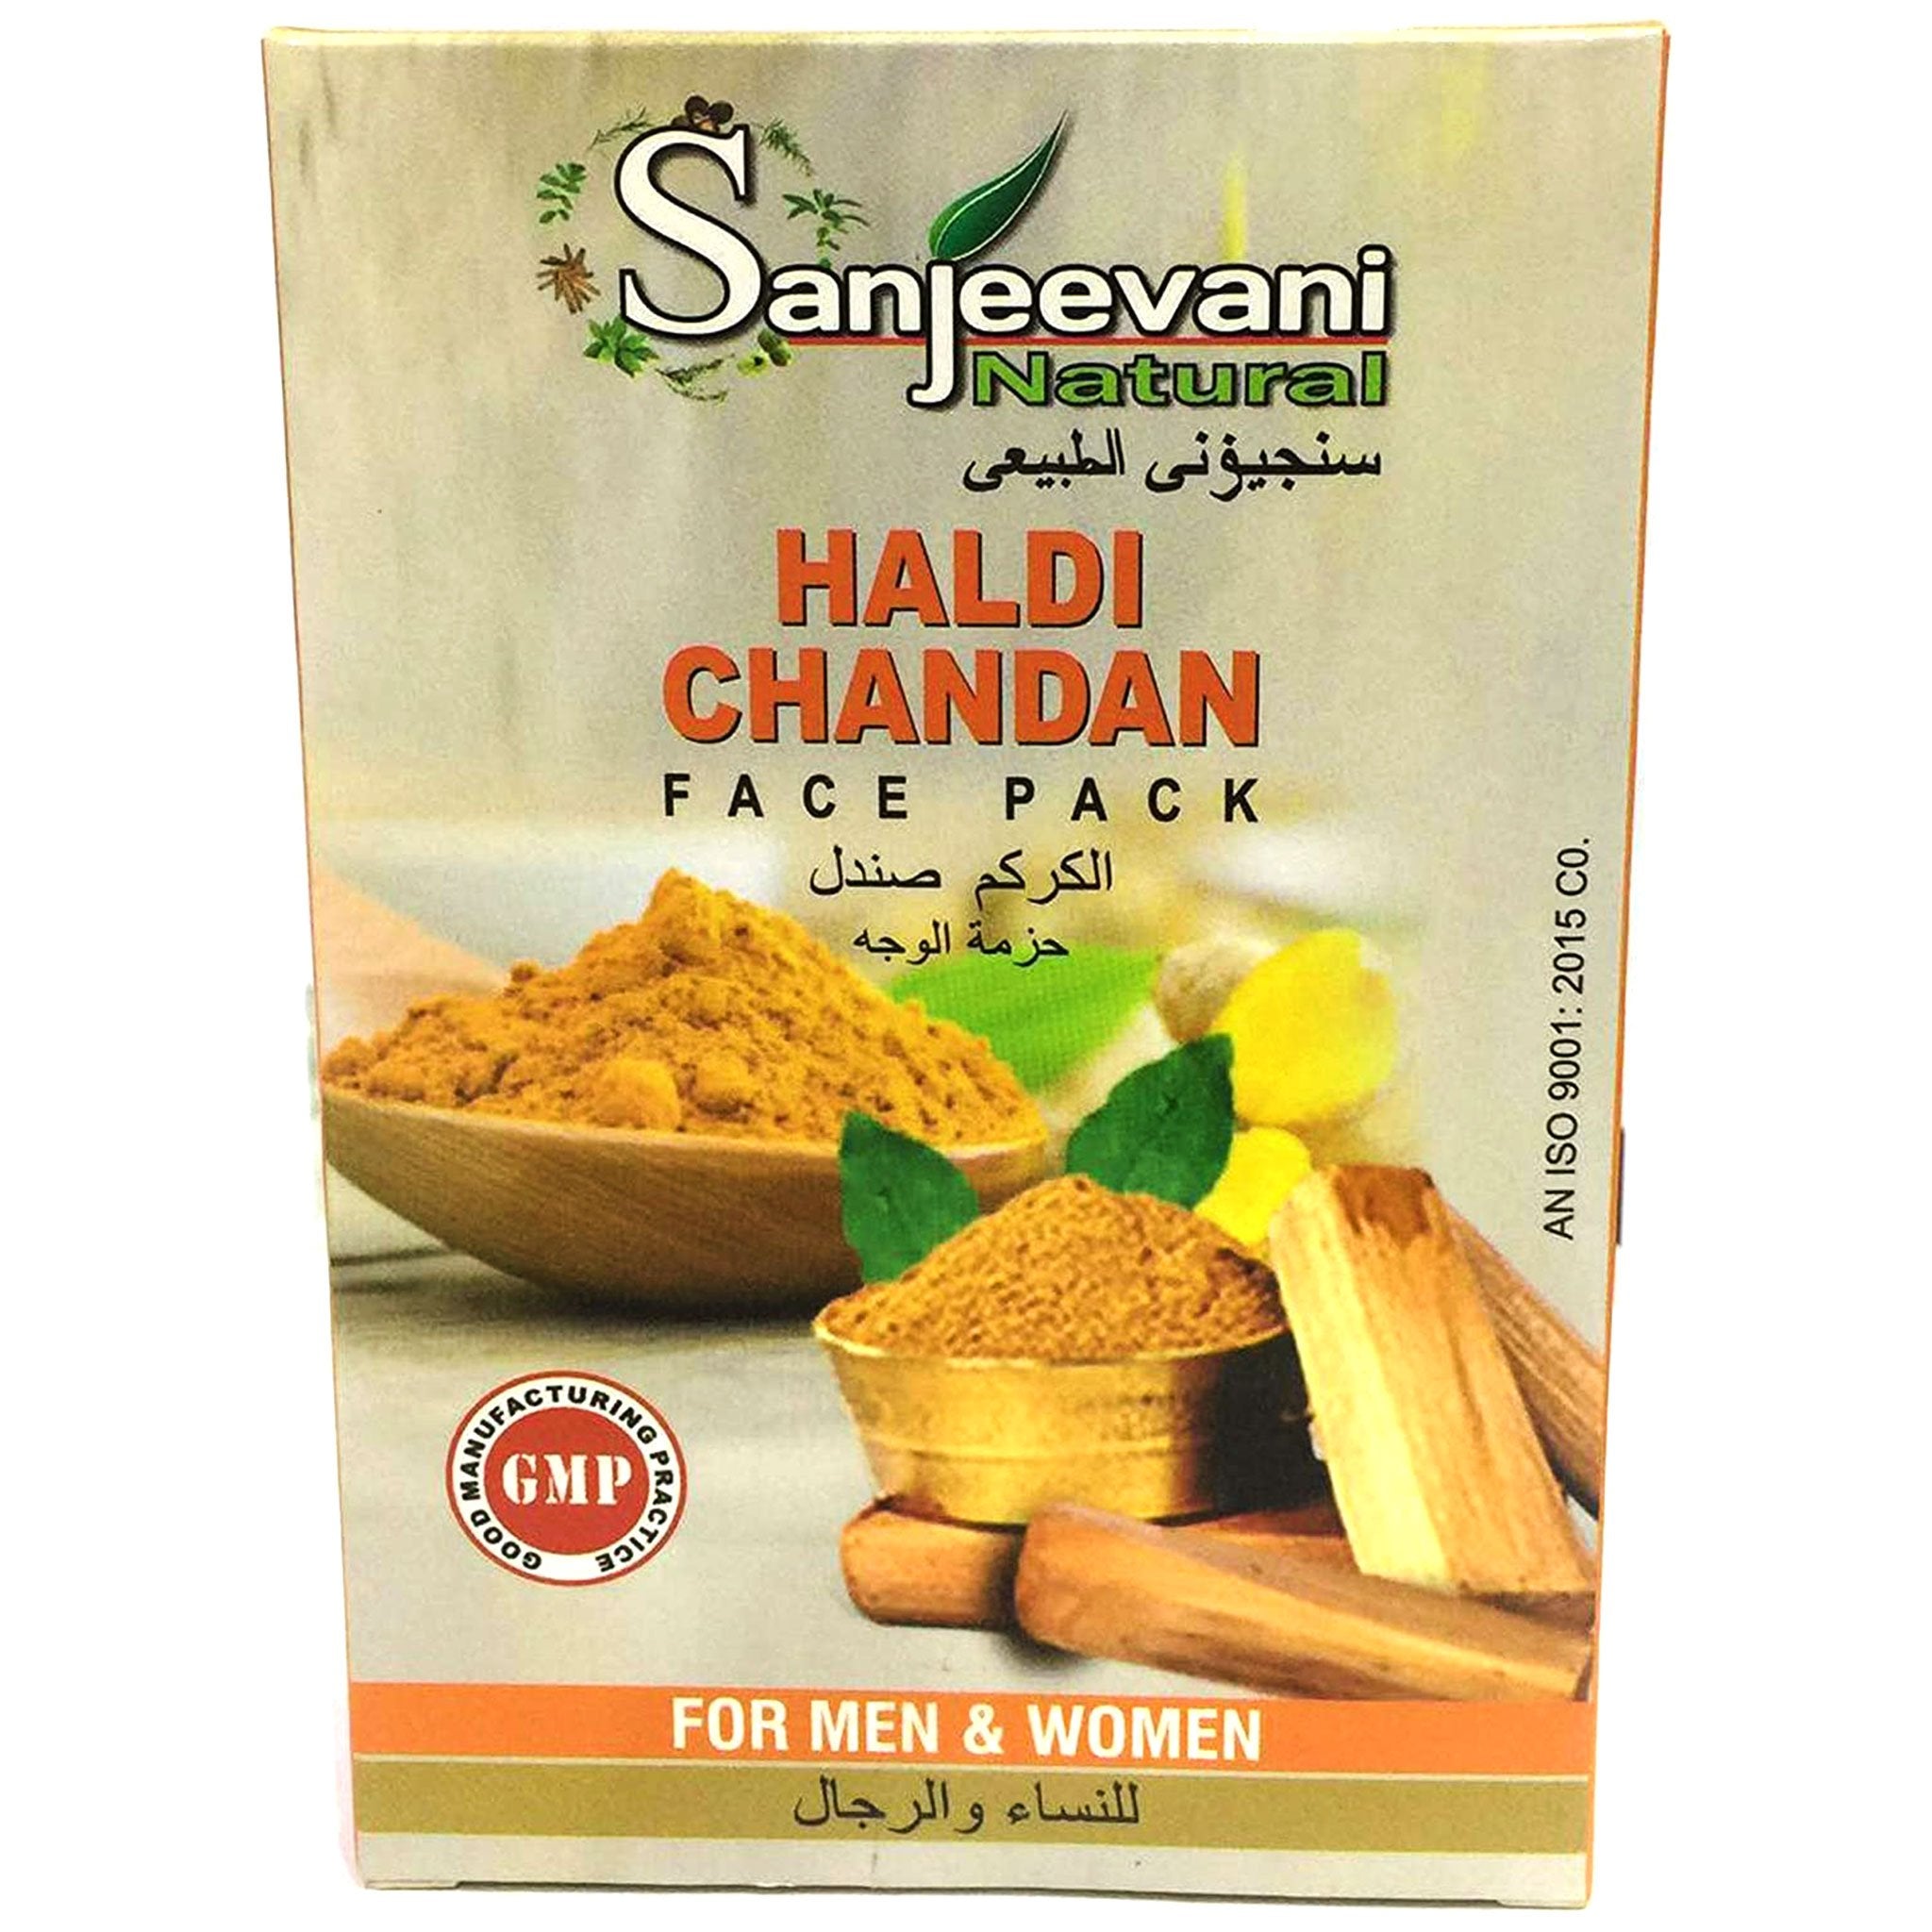 Sanjeevani Natural Haldi Chandan Face Pack 1box4x25g Value Pack of 4 